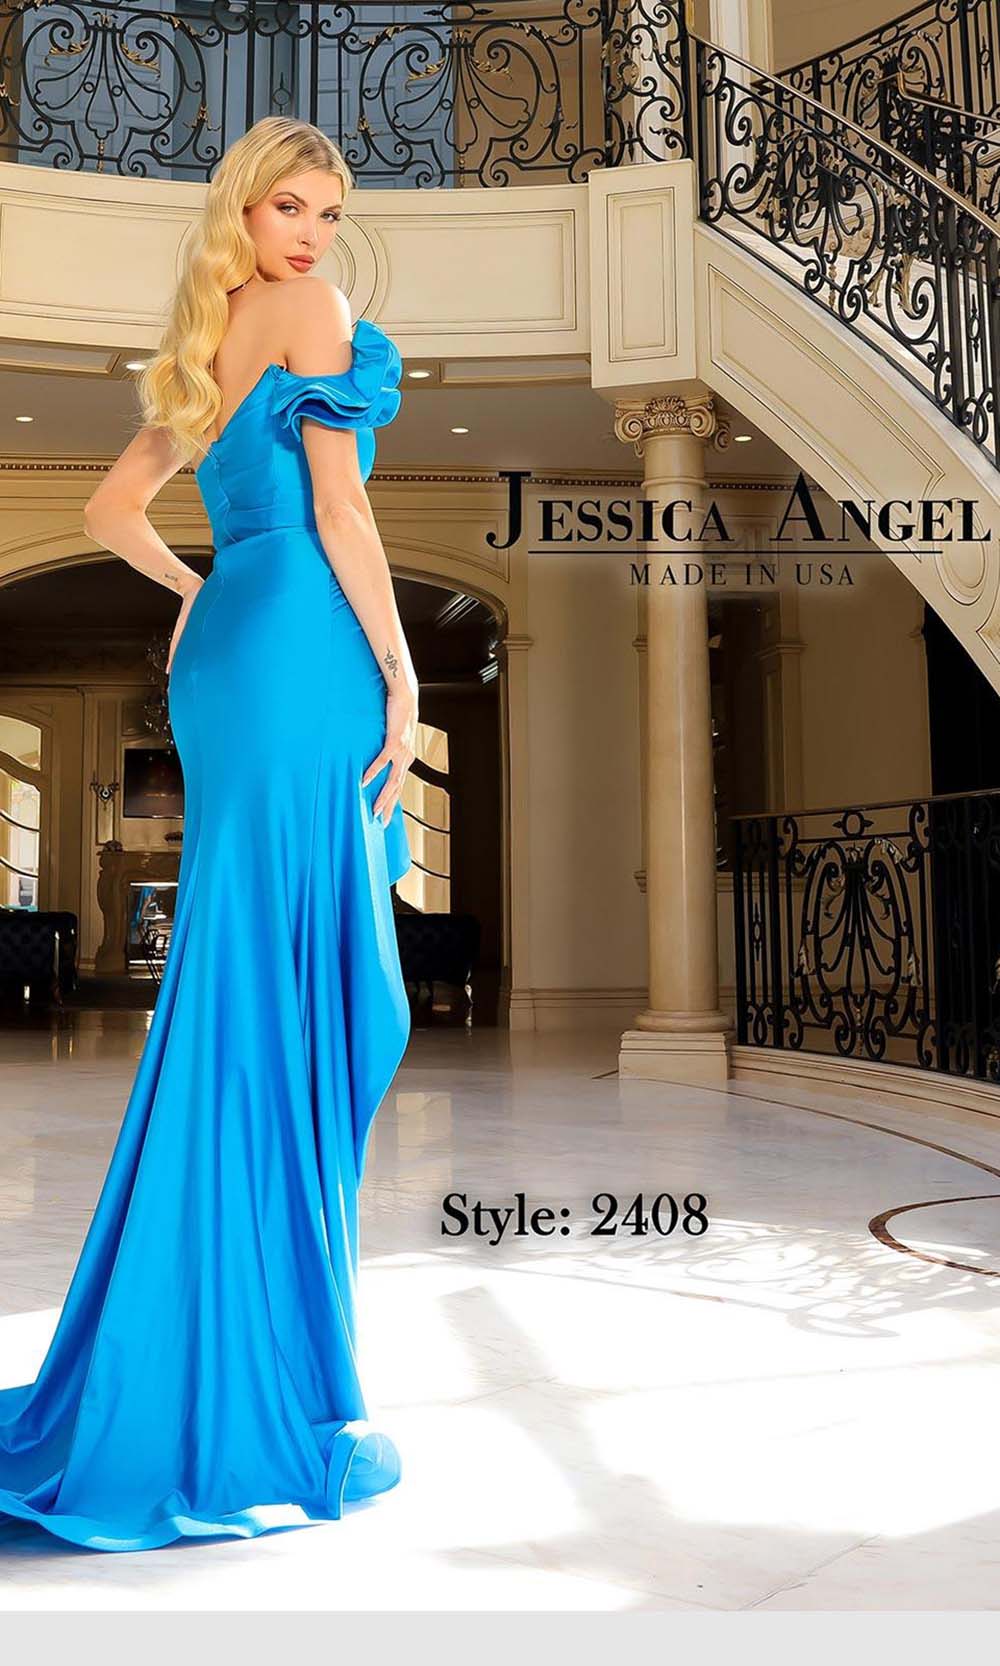 Jessica Angel 2408 Turquoise